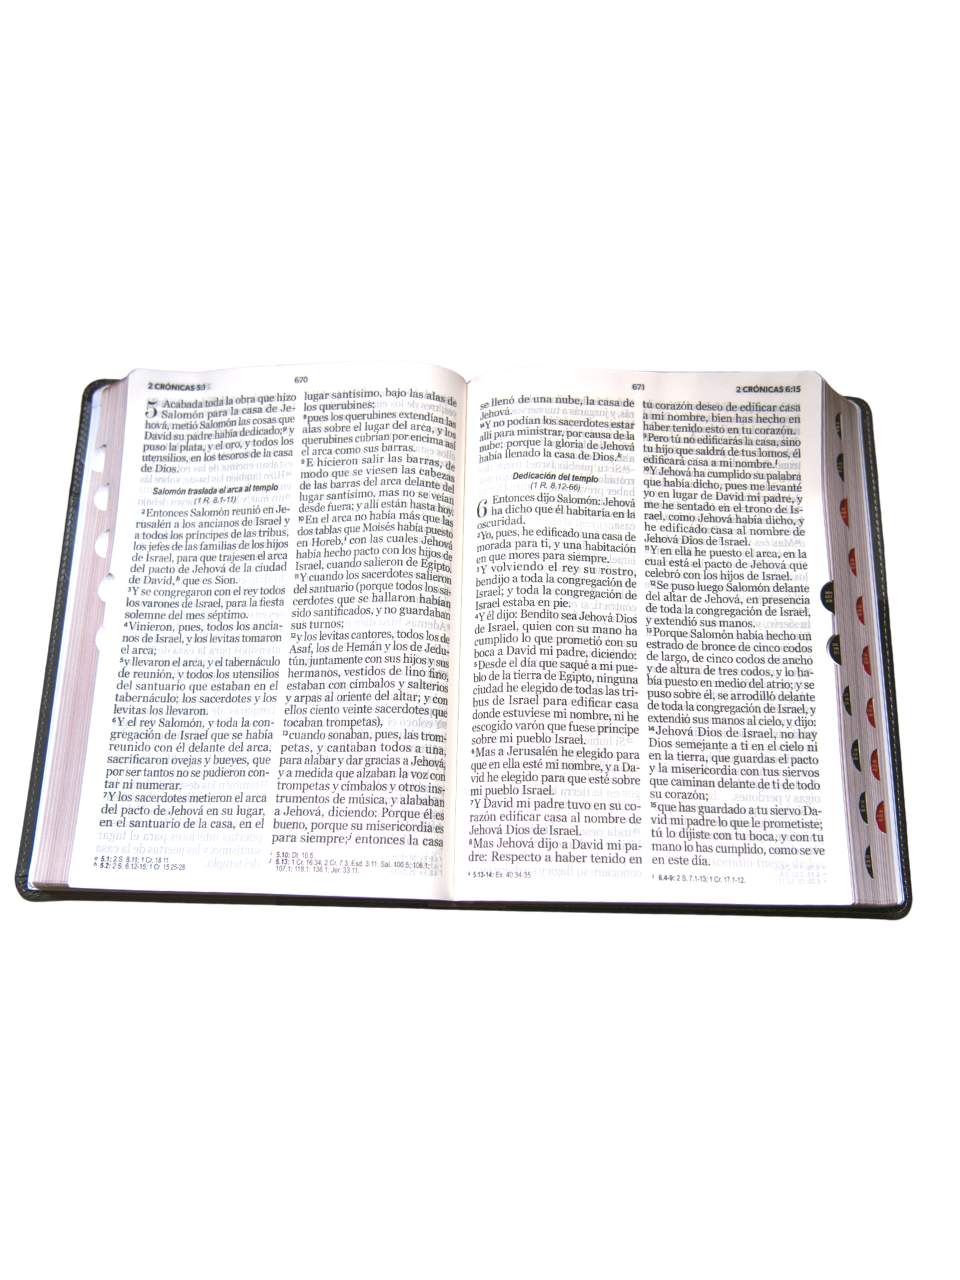 Biblia Reina Valera 1960. Biblia Pastoral Letra Super Gigante